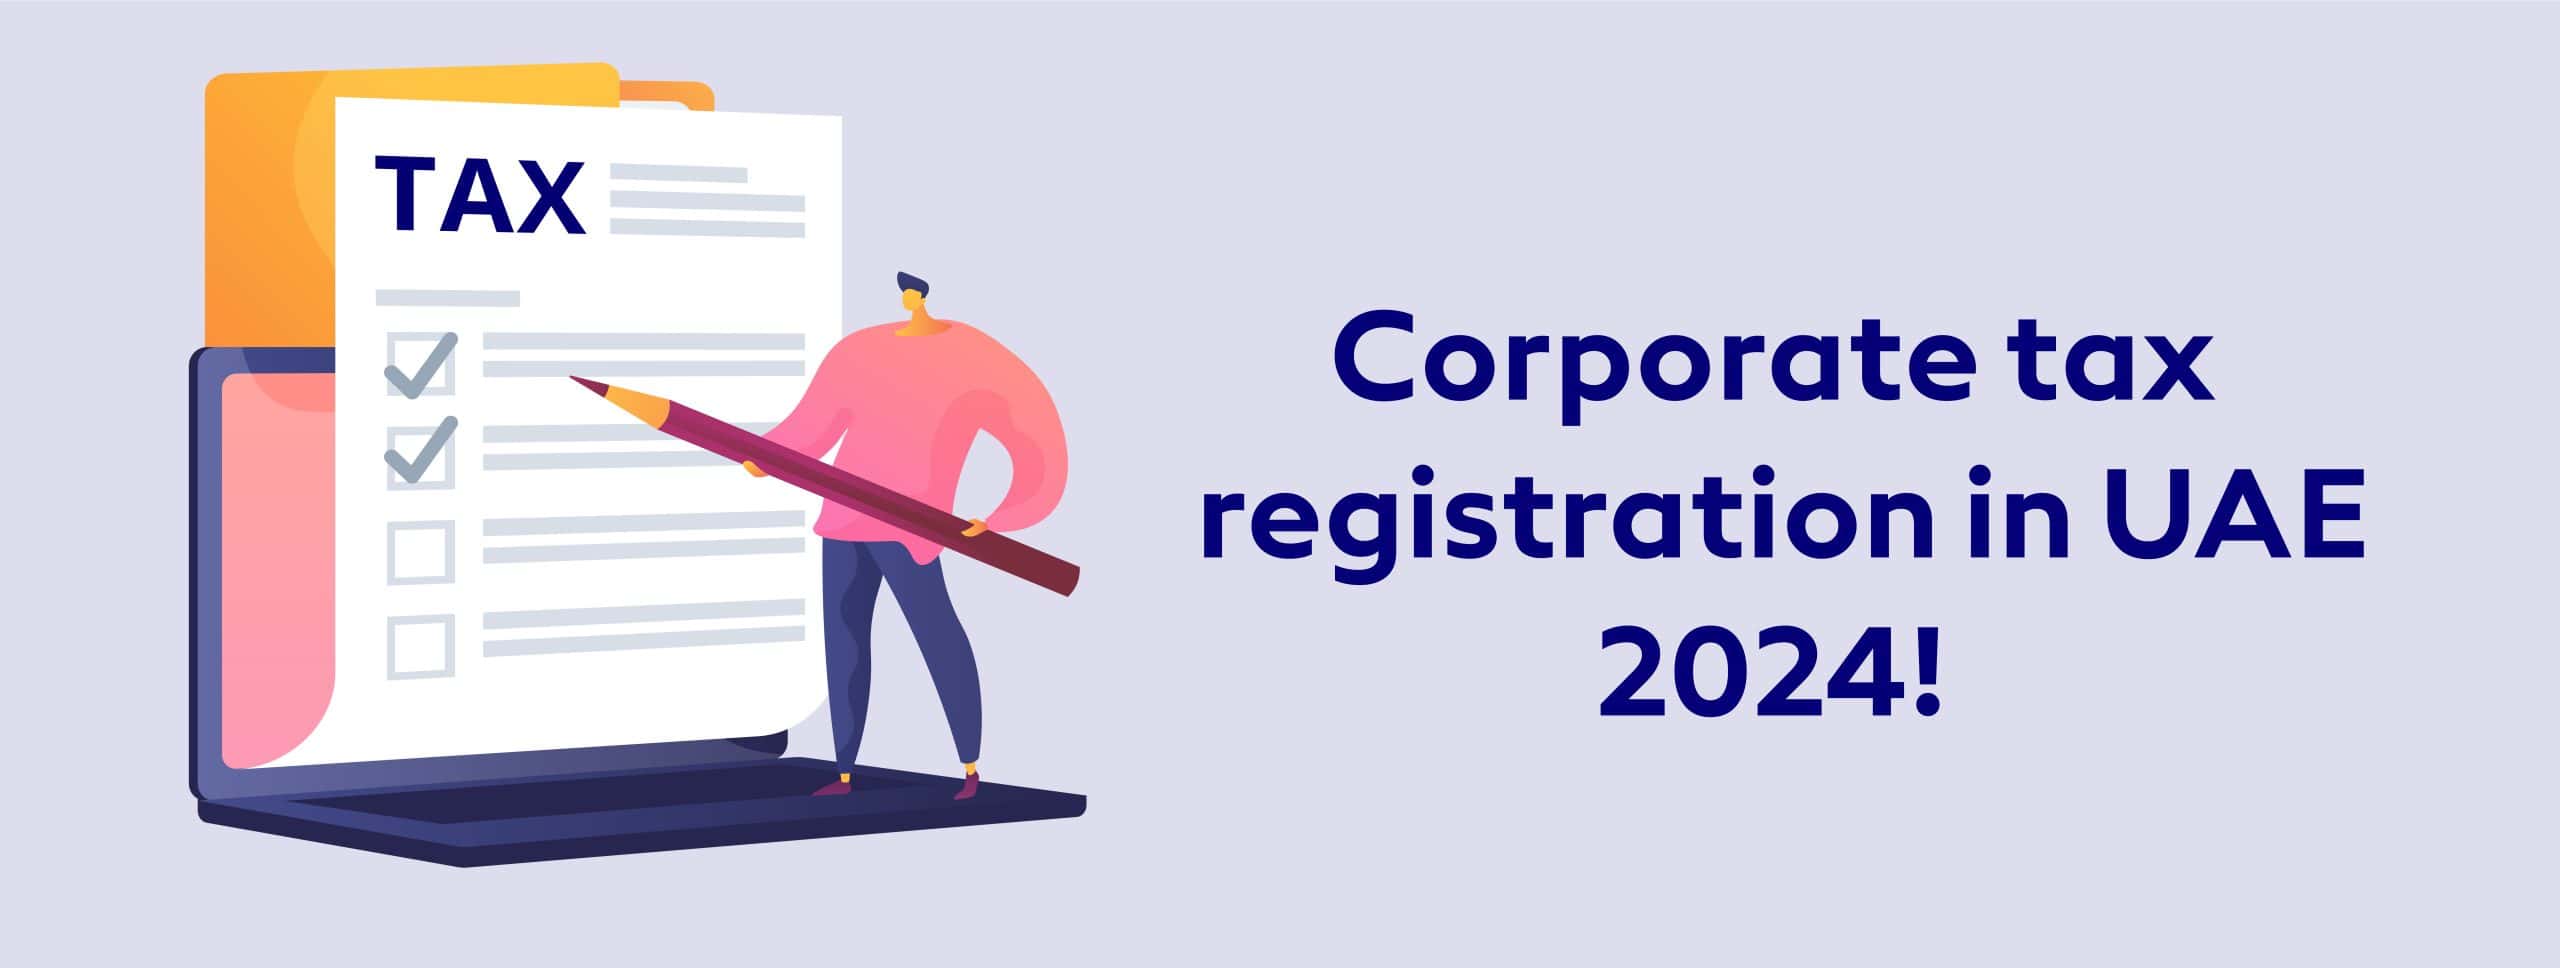 Corporate tax registration in UAE